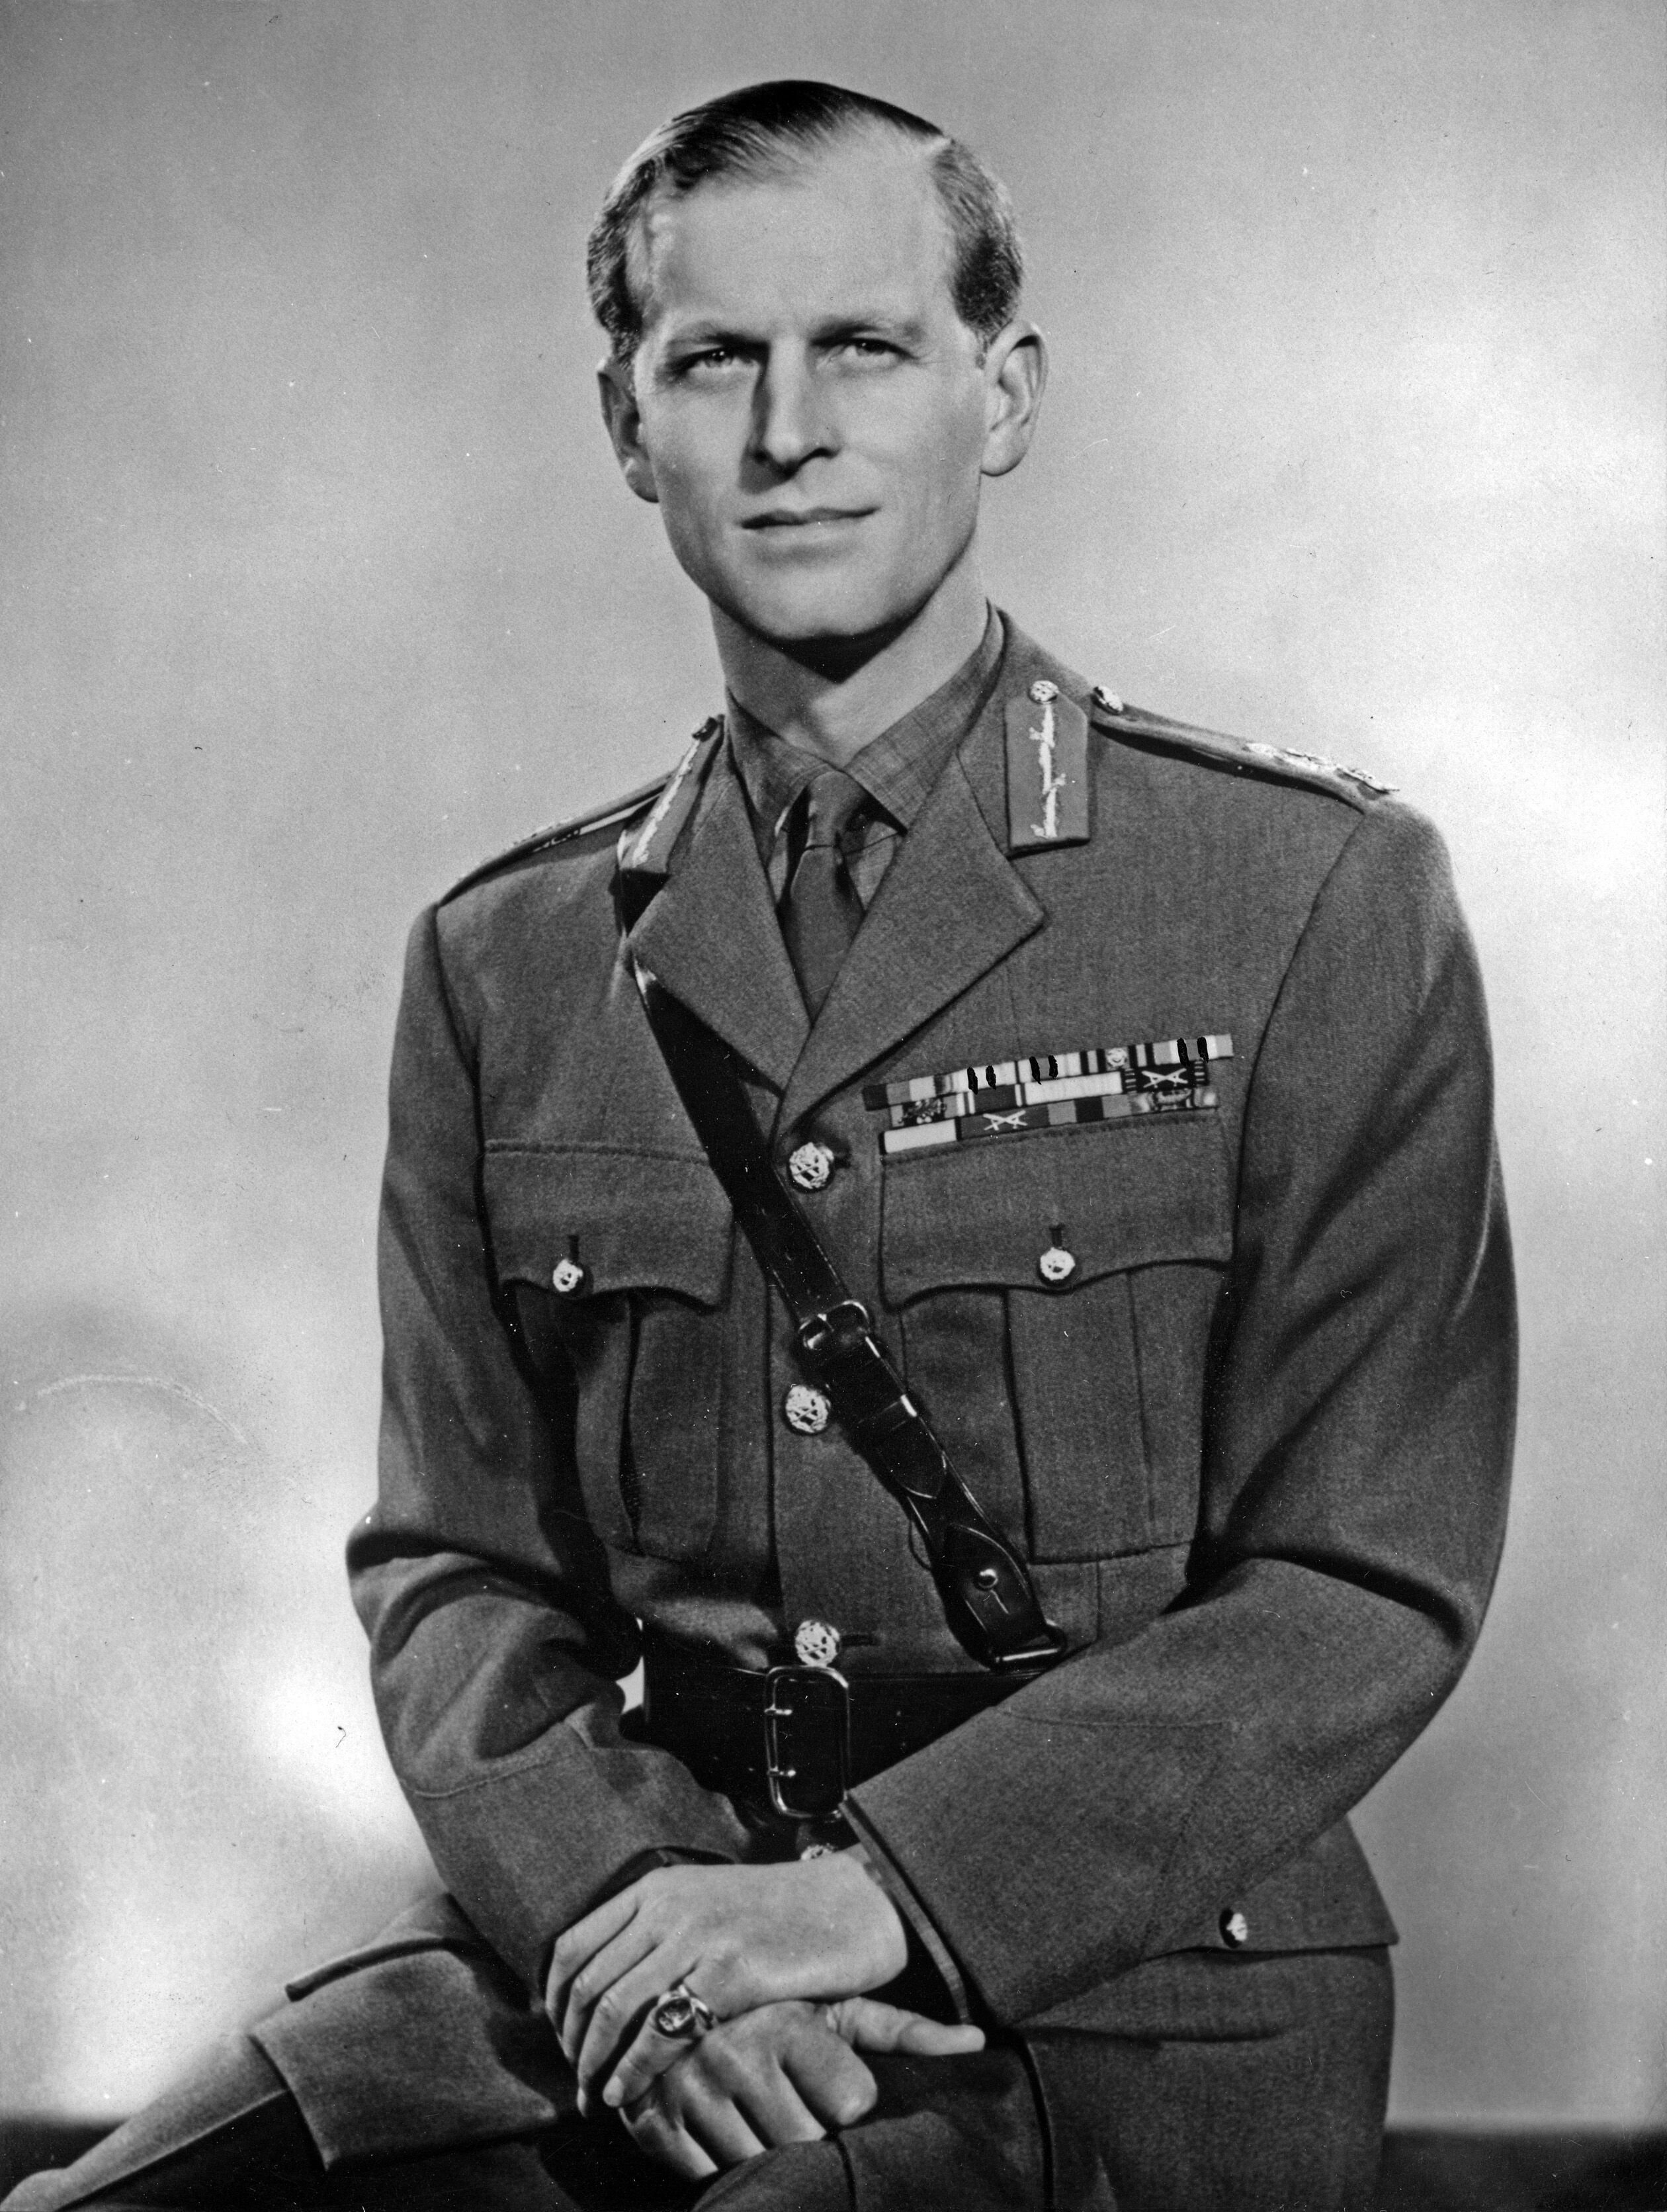 Philip Mountbatten (b1921) duke of Edinburgh, wearing his uniform of Field Marshal of the British Army. | Source: Getty Images